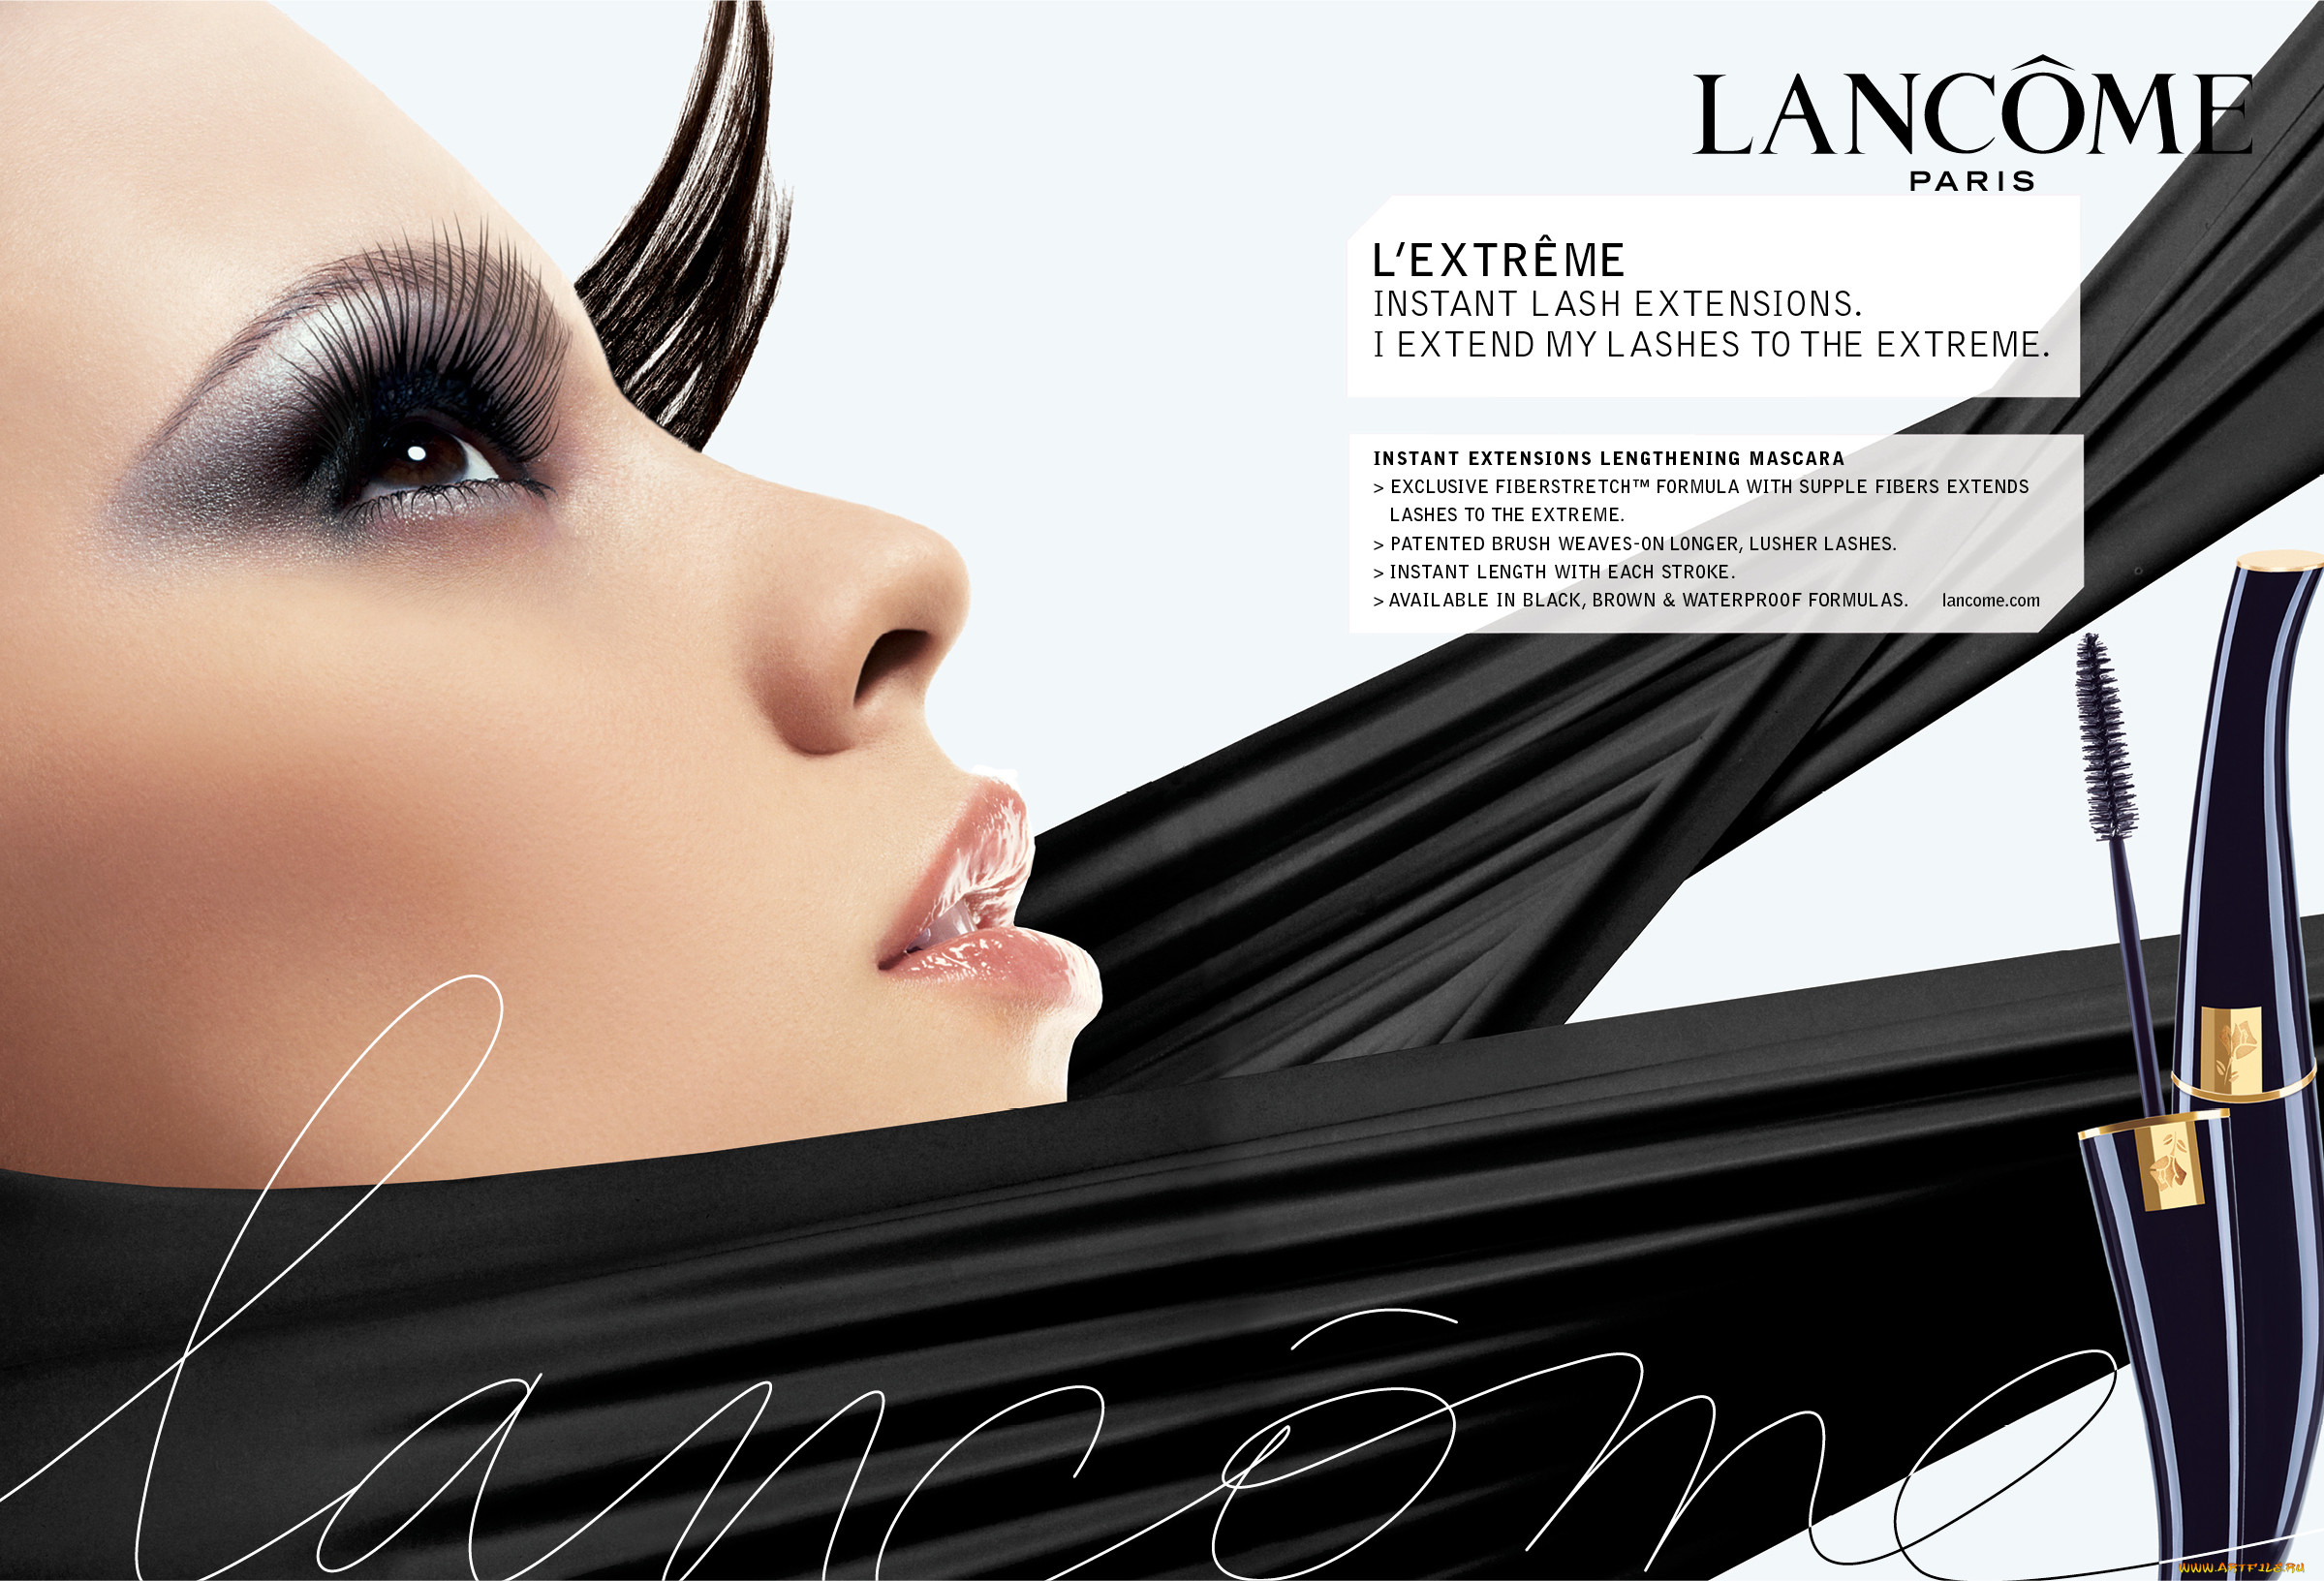 Реклама туши. Реклама туши в журнале. Реклама Lancome в журнале. Вывеска Lancome. Lancome - картинки бренда.